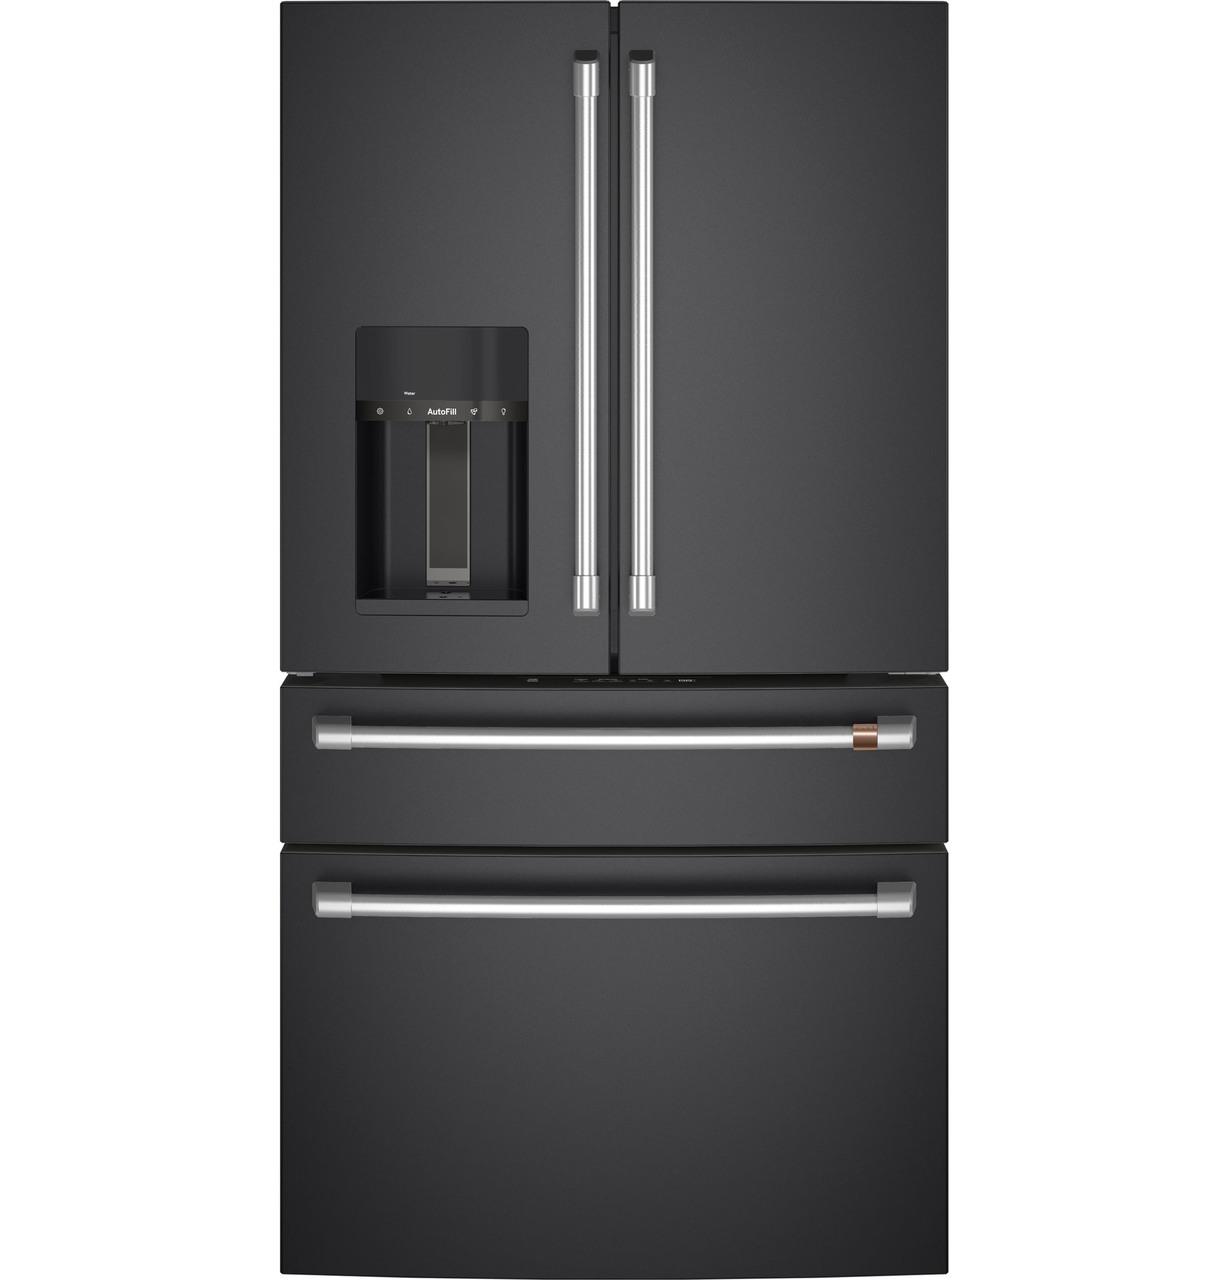 Cafe Caf(eback)™ ENERGY STAR® 27.8 Cu. Ft. Smart 4-Door French-Door Refrigerator